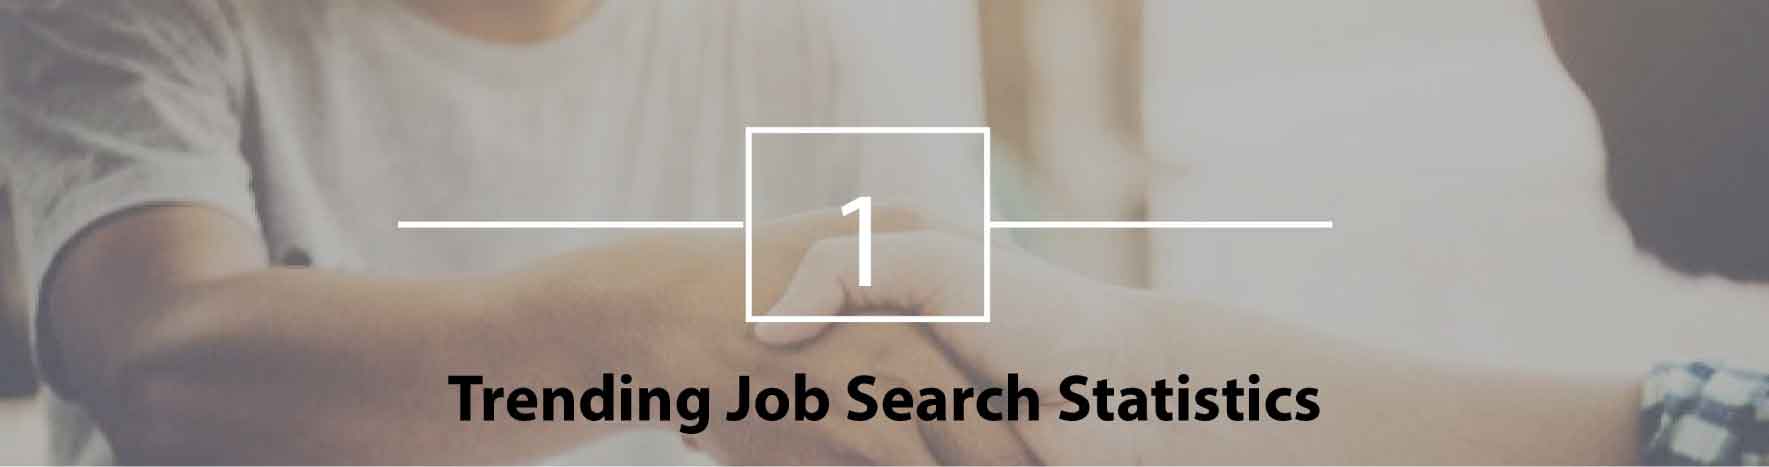 Trending Job Search Statistics